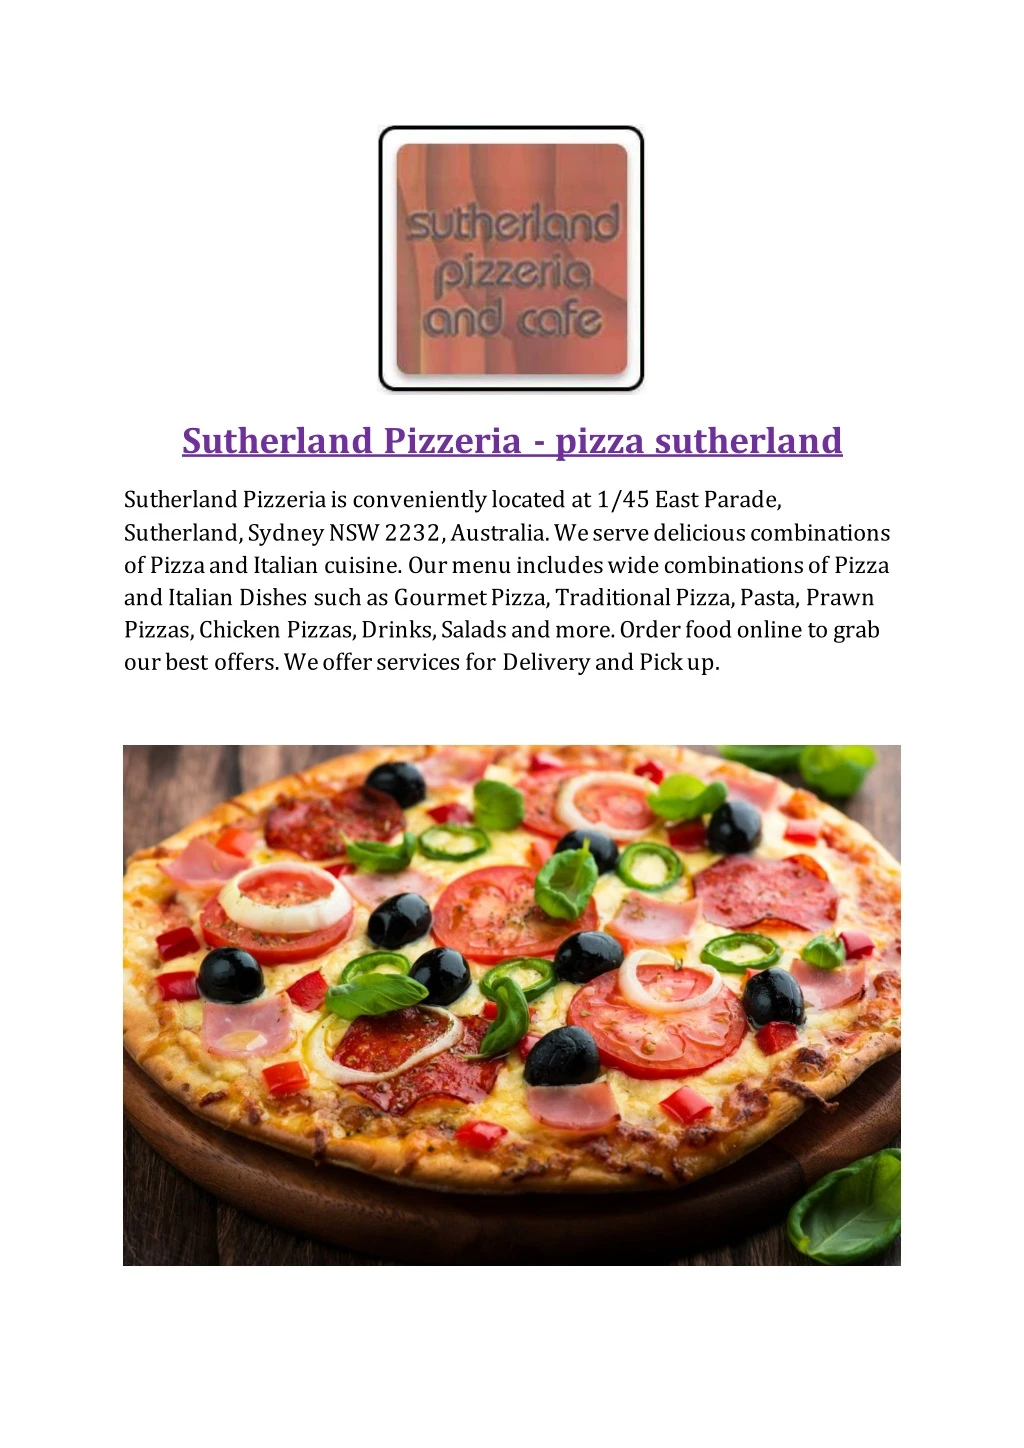 sutherland pizzeria pizza sutherland